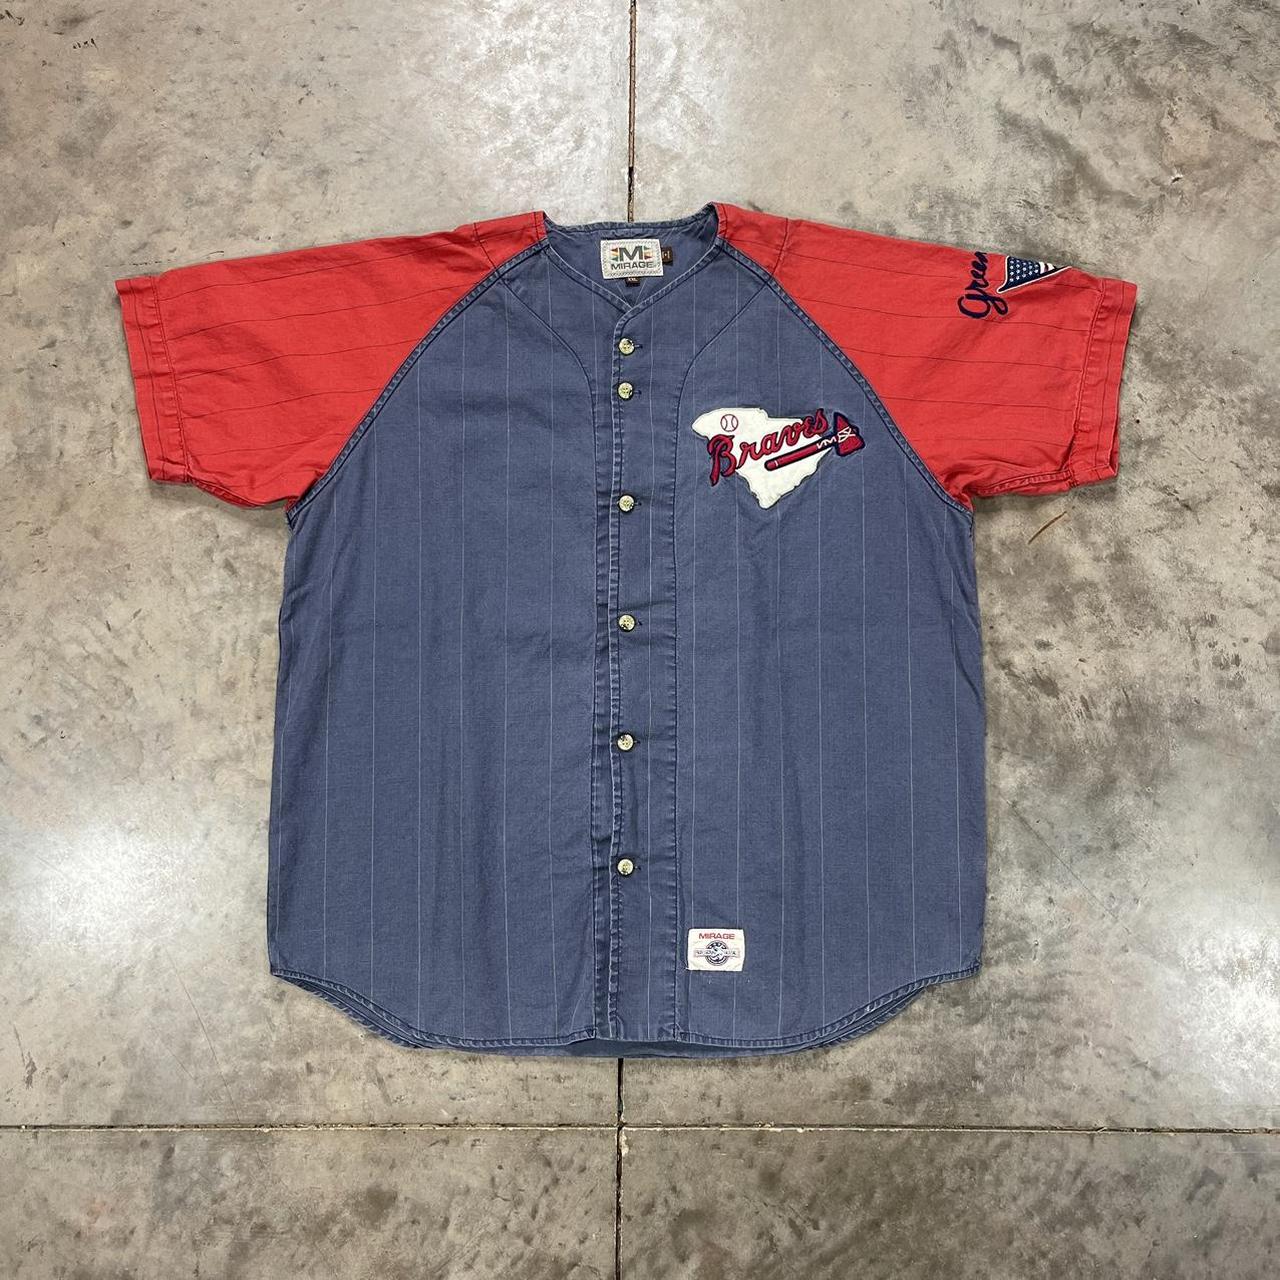 vintage stanford baseball jersey with embroidered - Depop